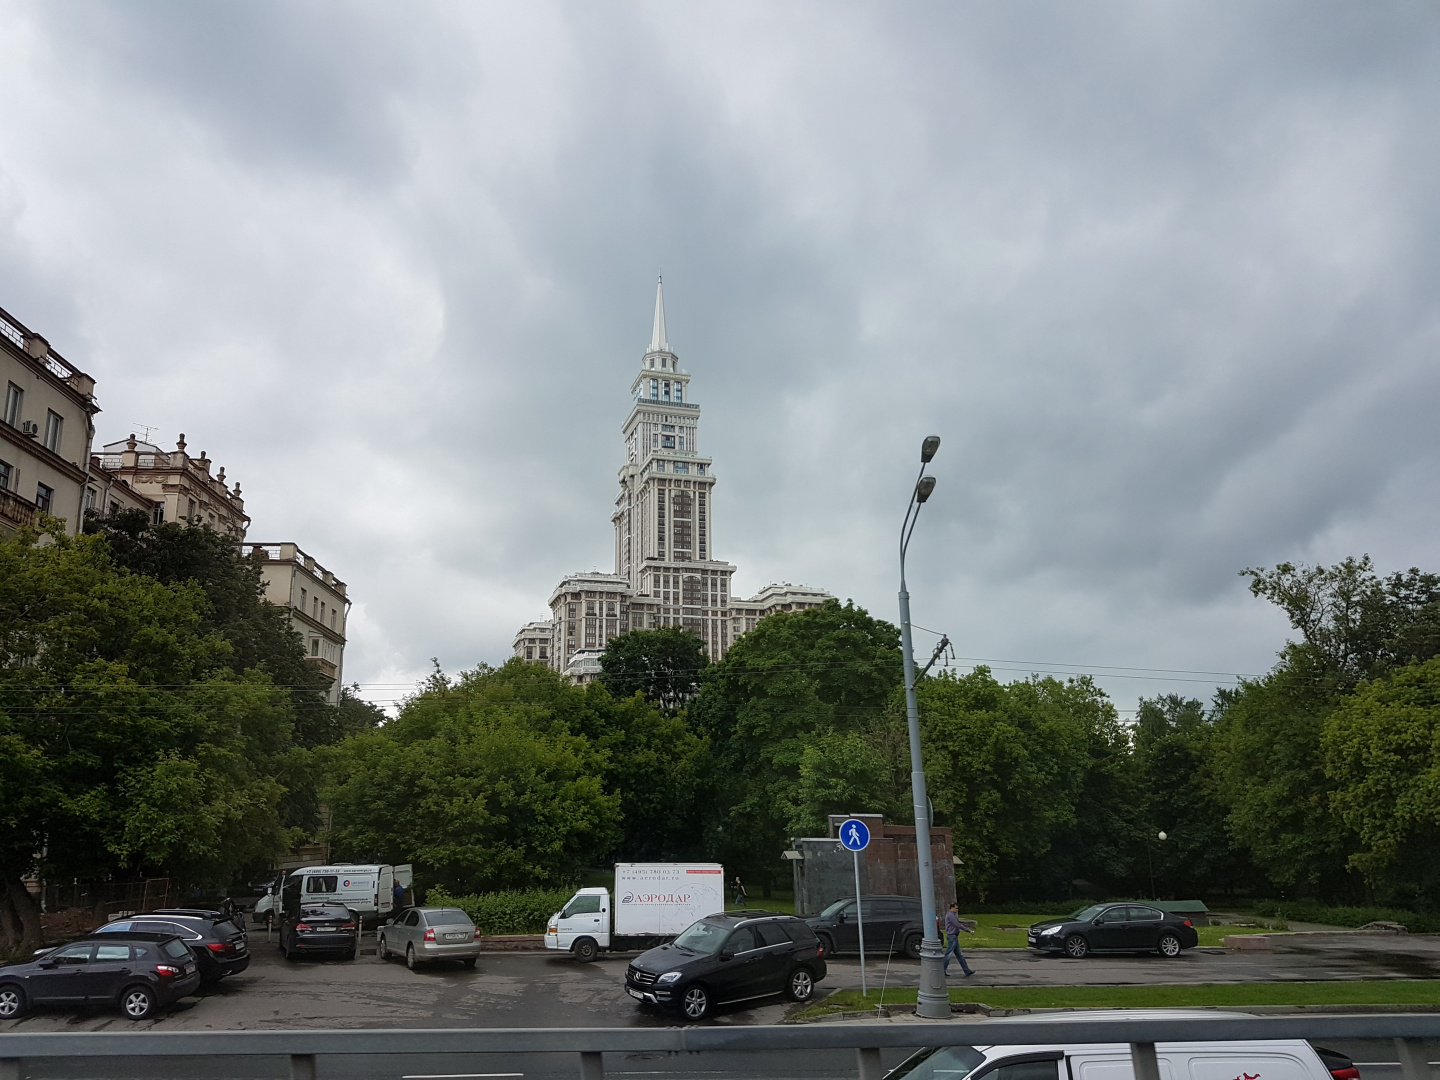 20170704-134440-Moscow-Leningradskiy_Prospekt-SJ.jpg